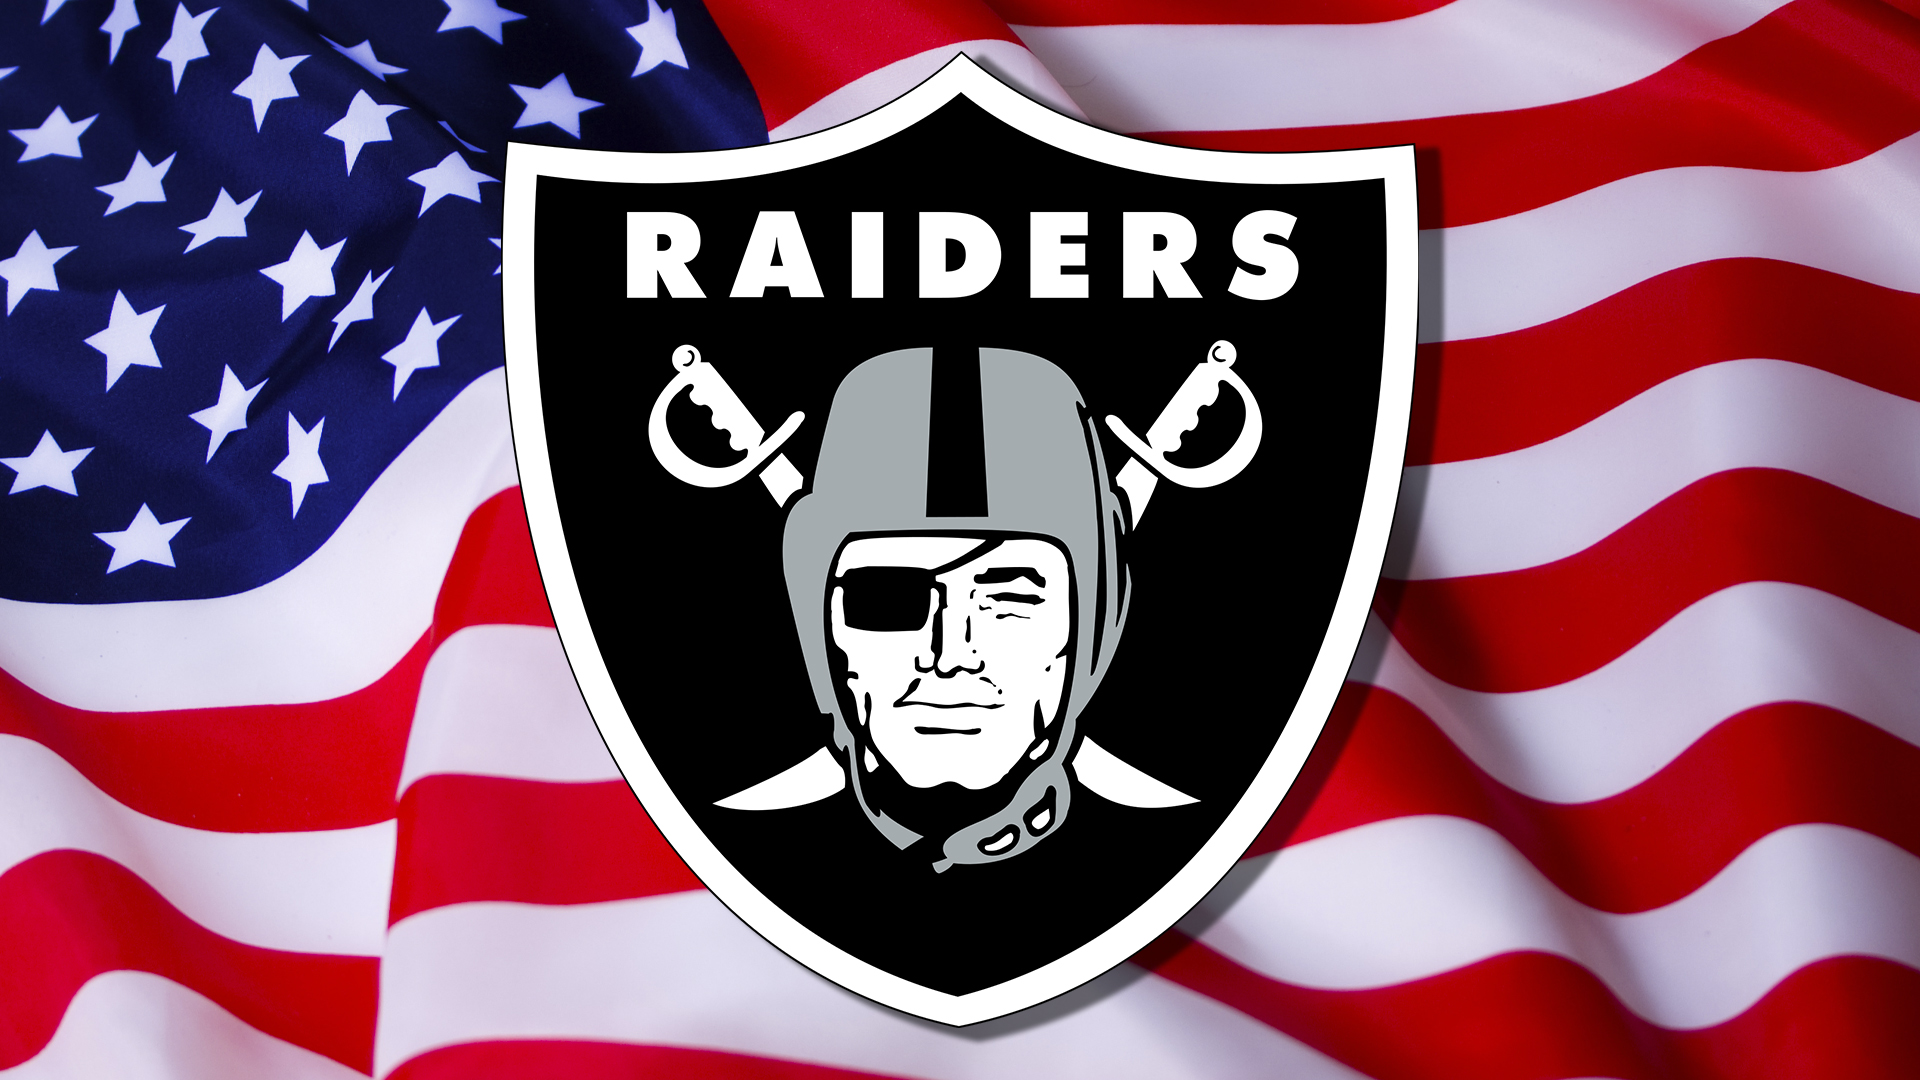 The Raiders badge